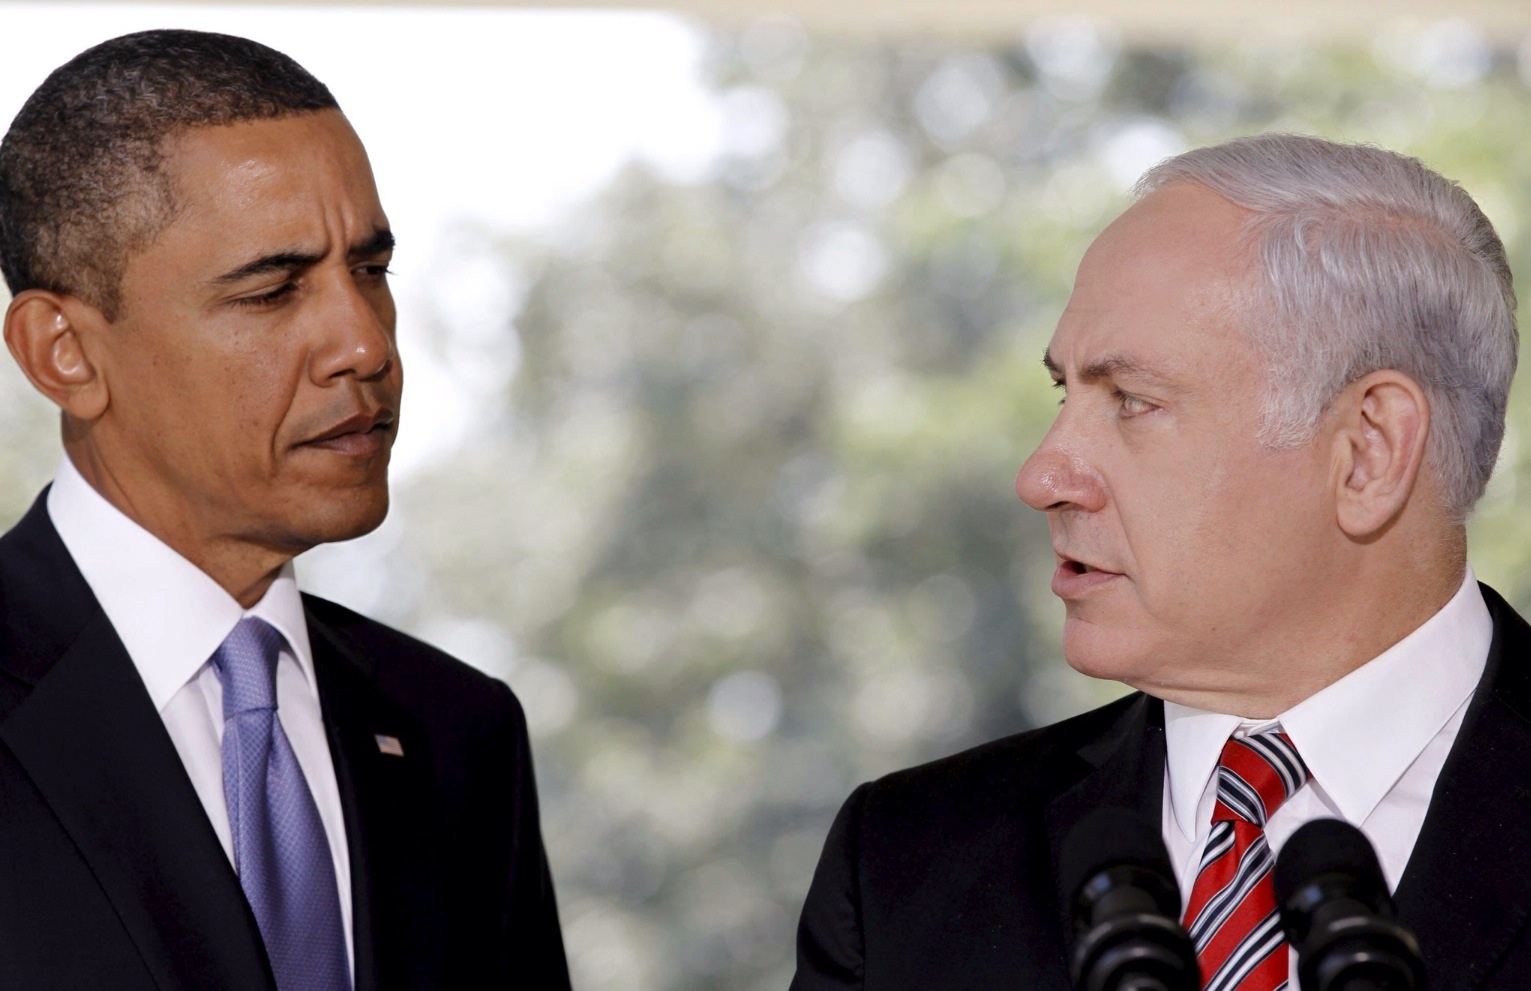 Oakwood Political Scientist to negotiate peace between Obama and Netanyahu